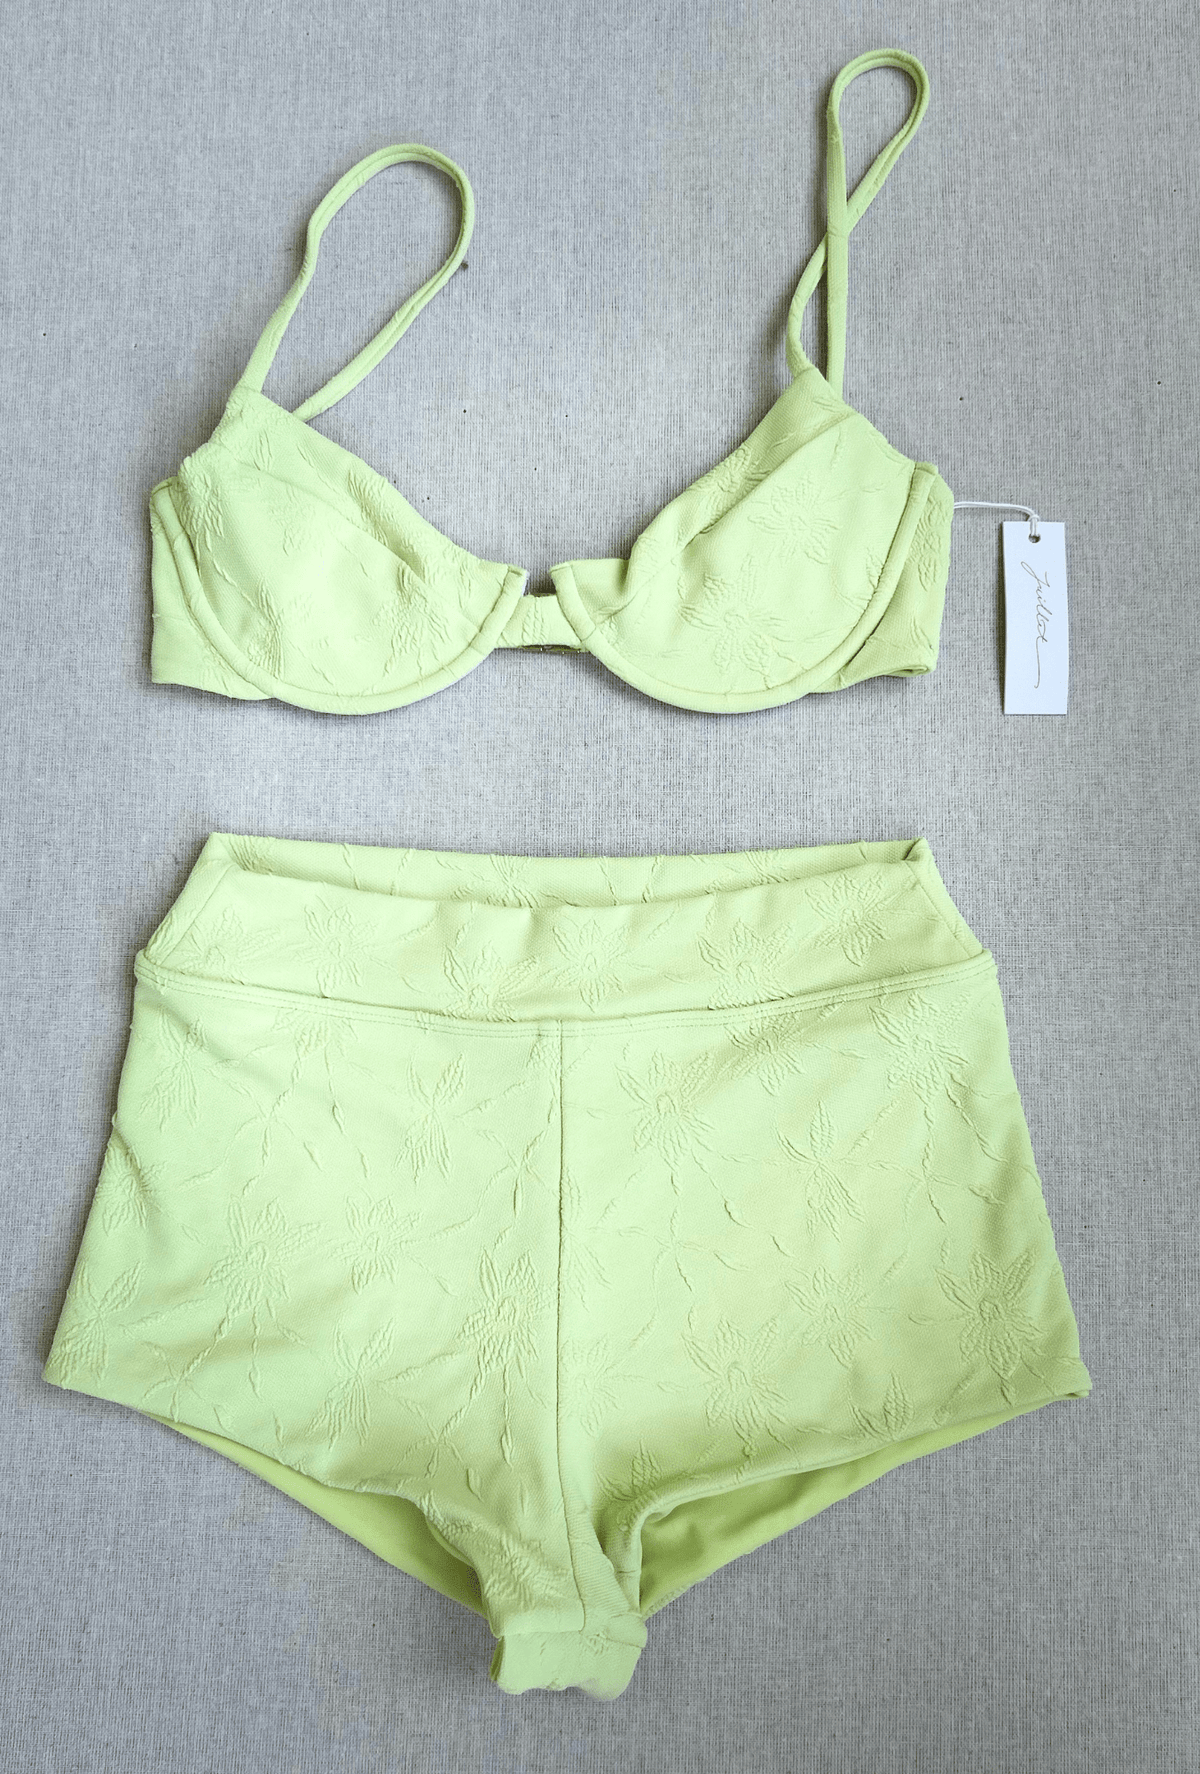 lulu top / sutton short in light green floral texture - size xs